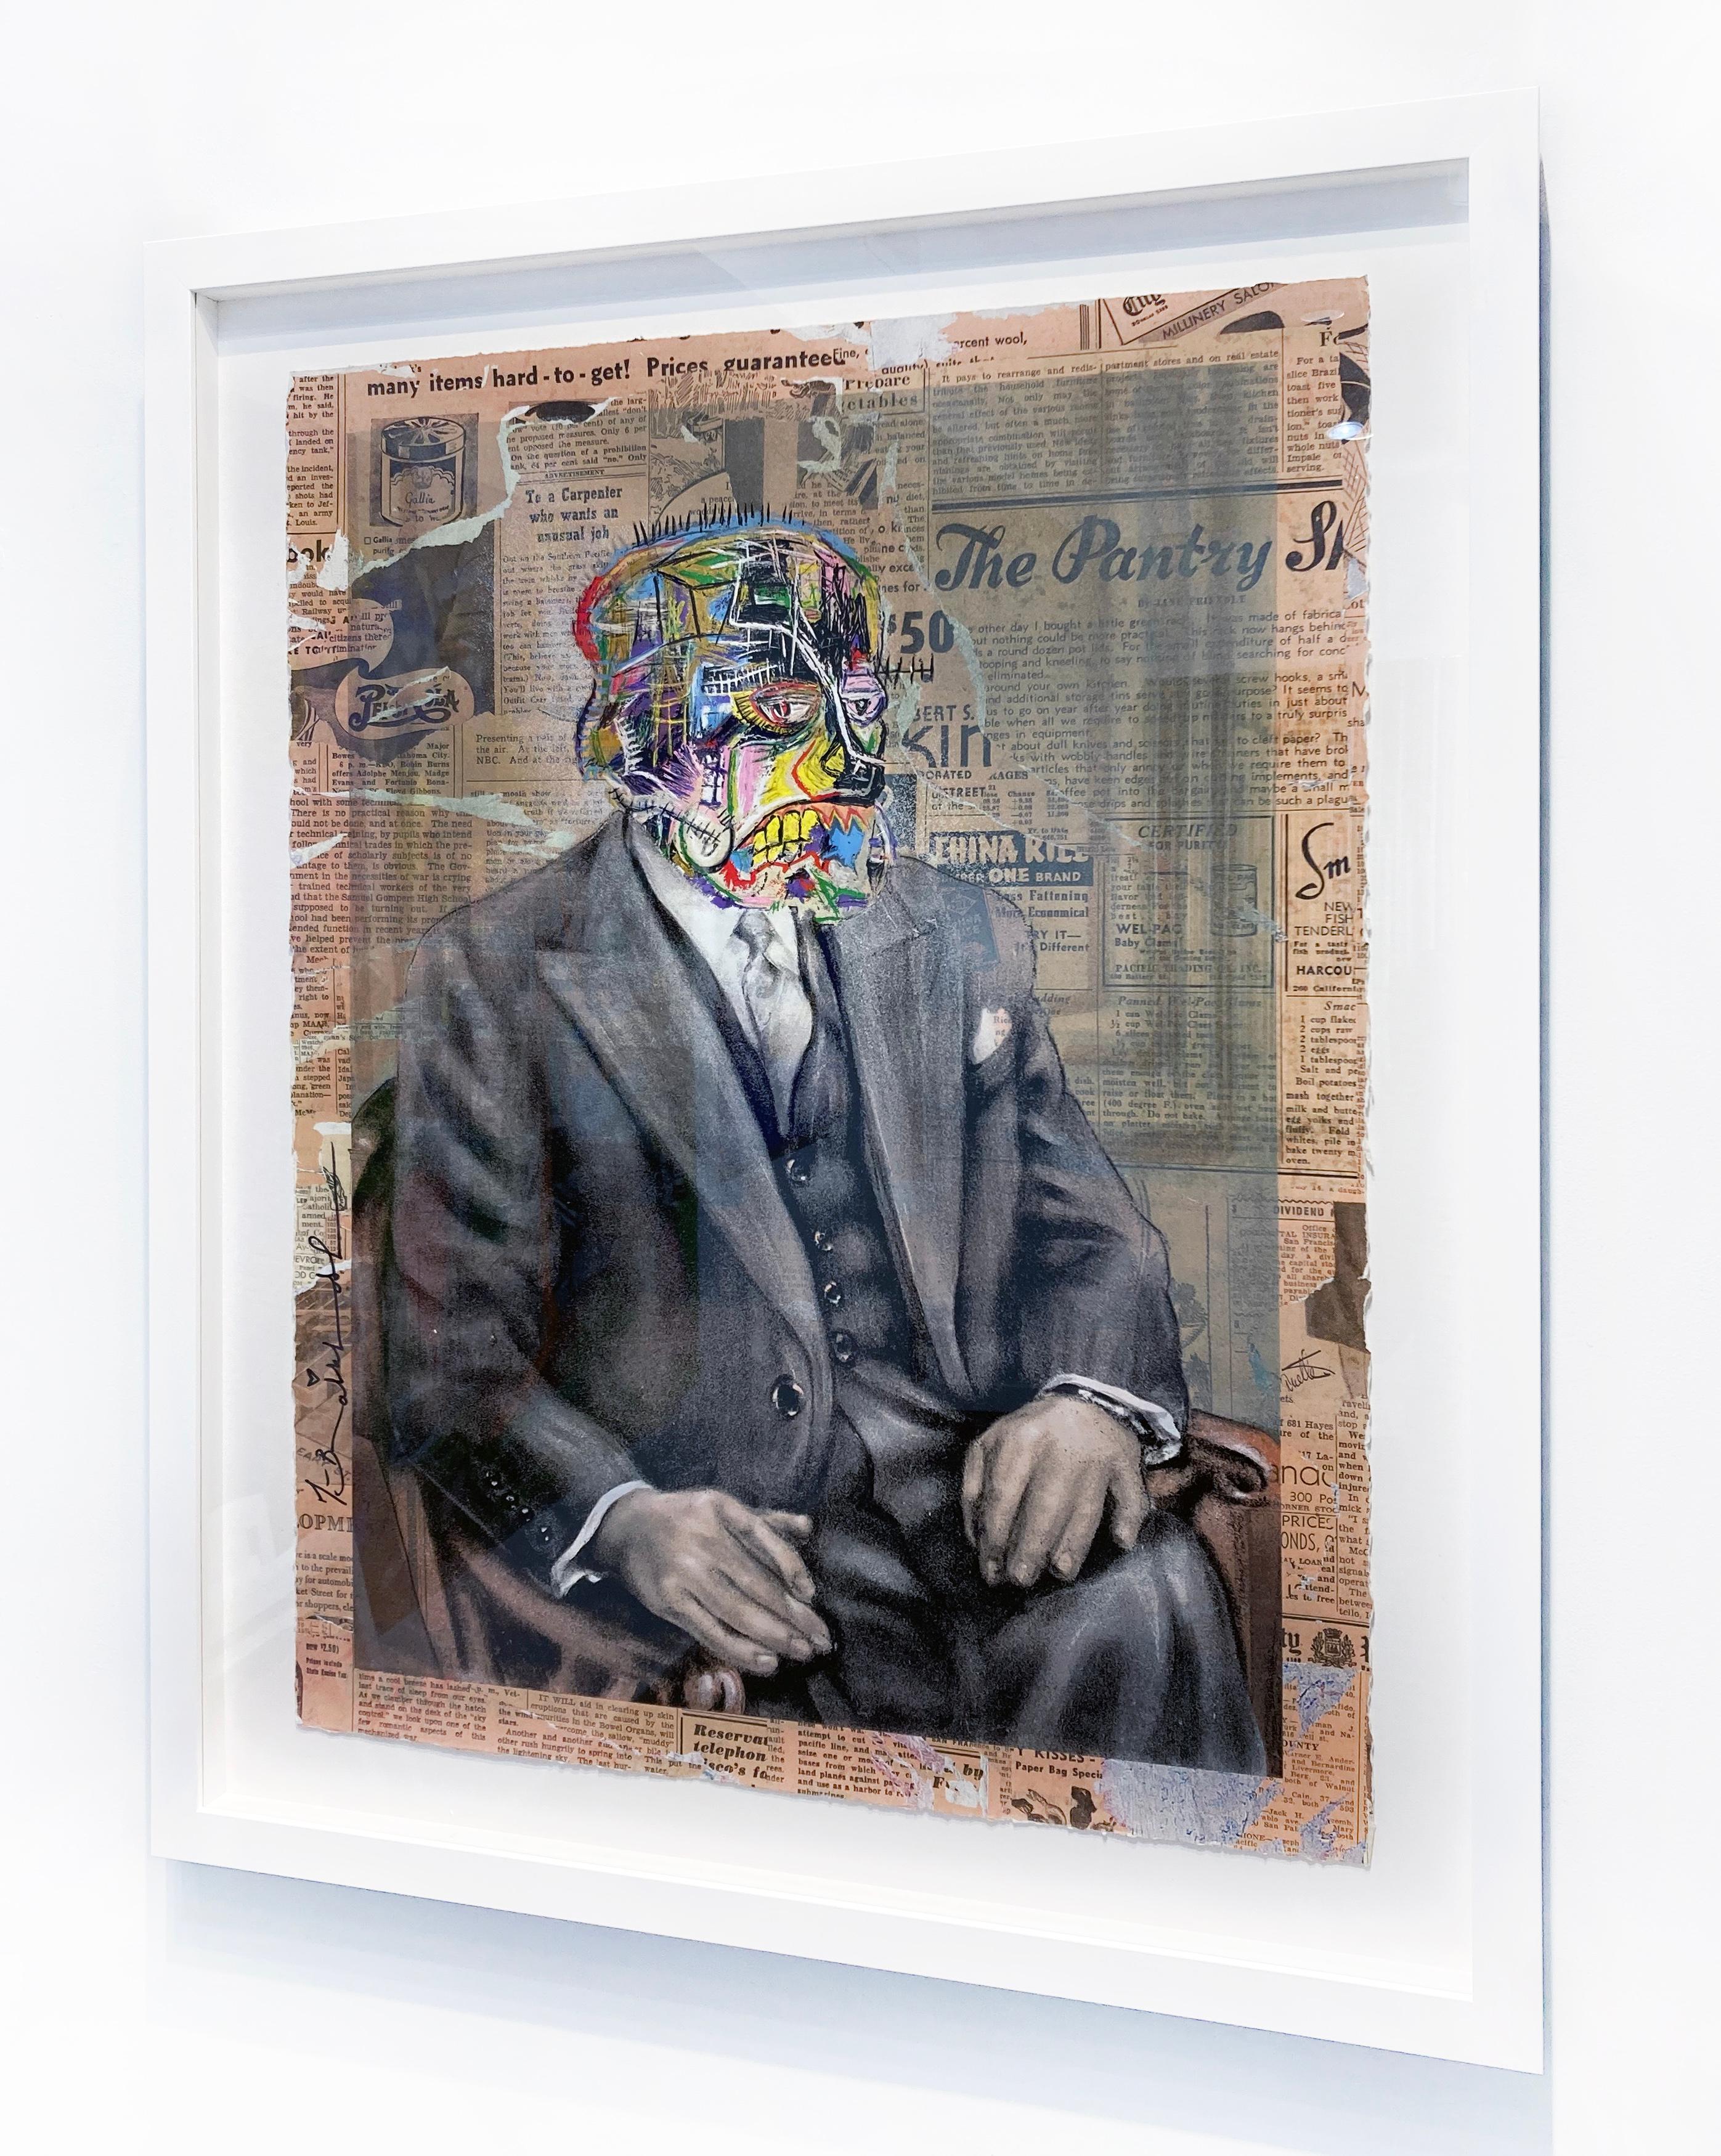 Artist:  Brainwash, Mr.
Title:  The Portrait
Date:  2021
Medium:  Silkscreen and Mixed Media on Paper
Unframed Dimensions:  30 